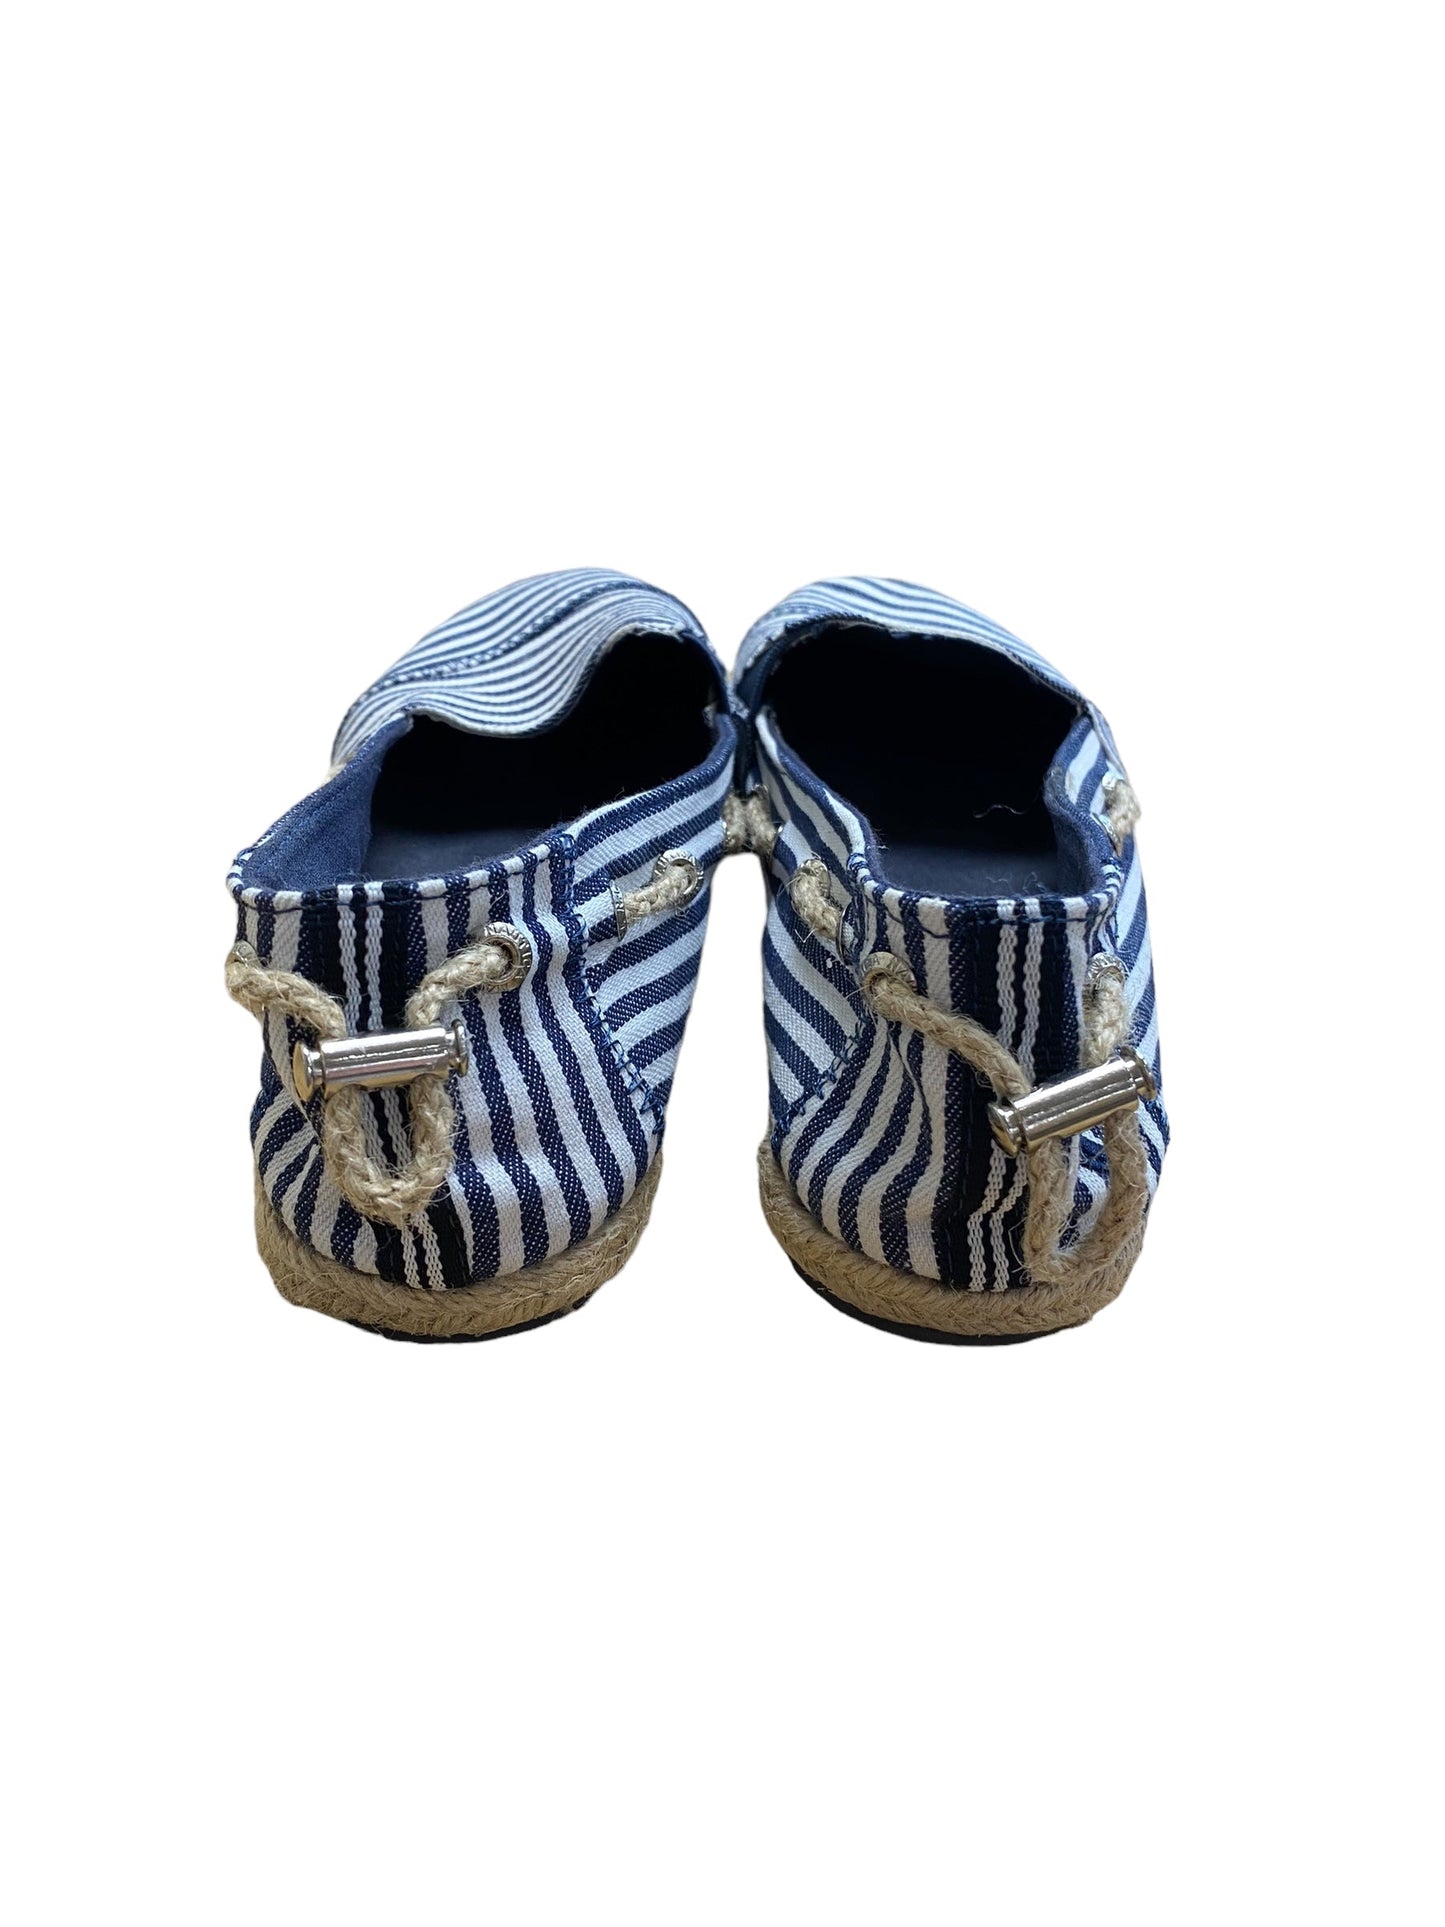 Striped Pattern Shoes Flats Nautica, Size 7.5